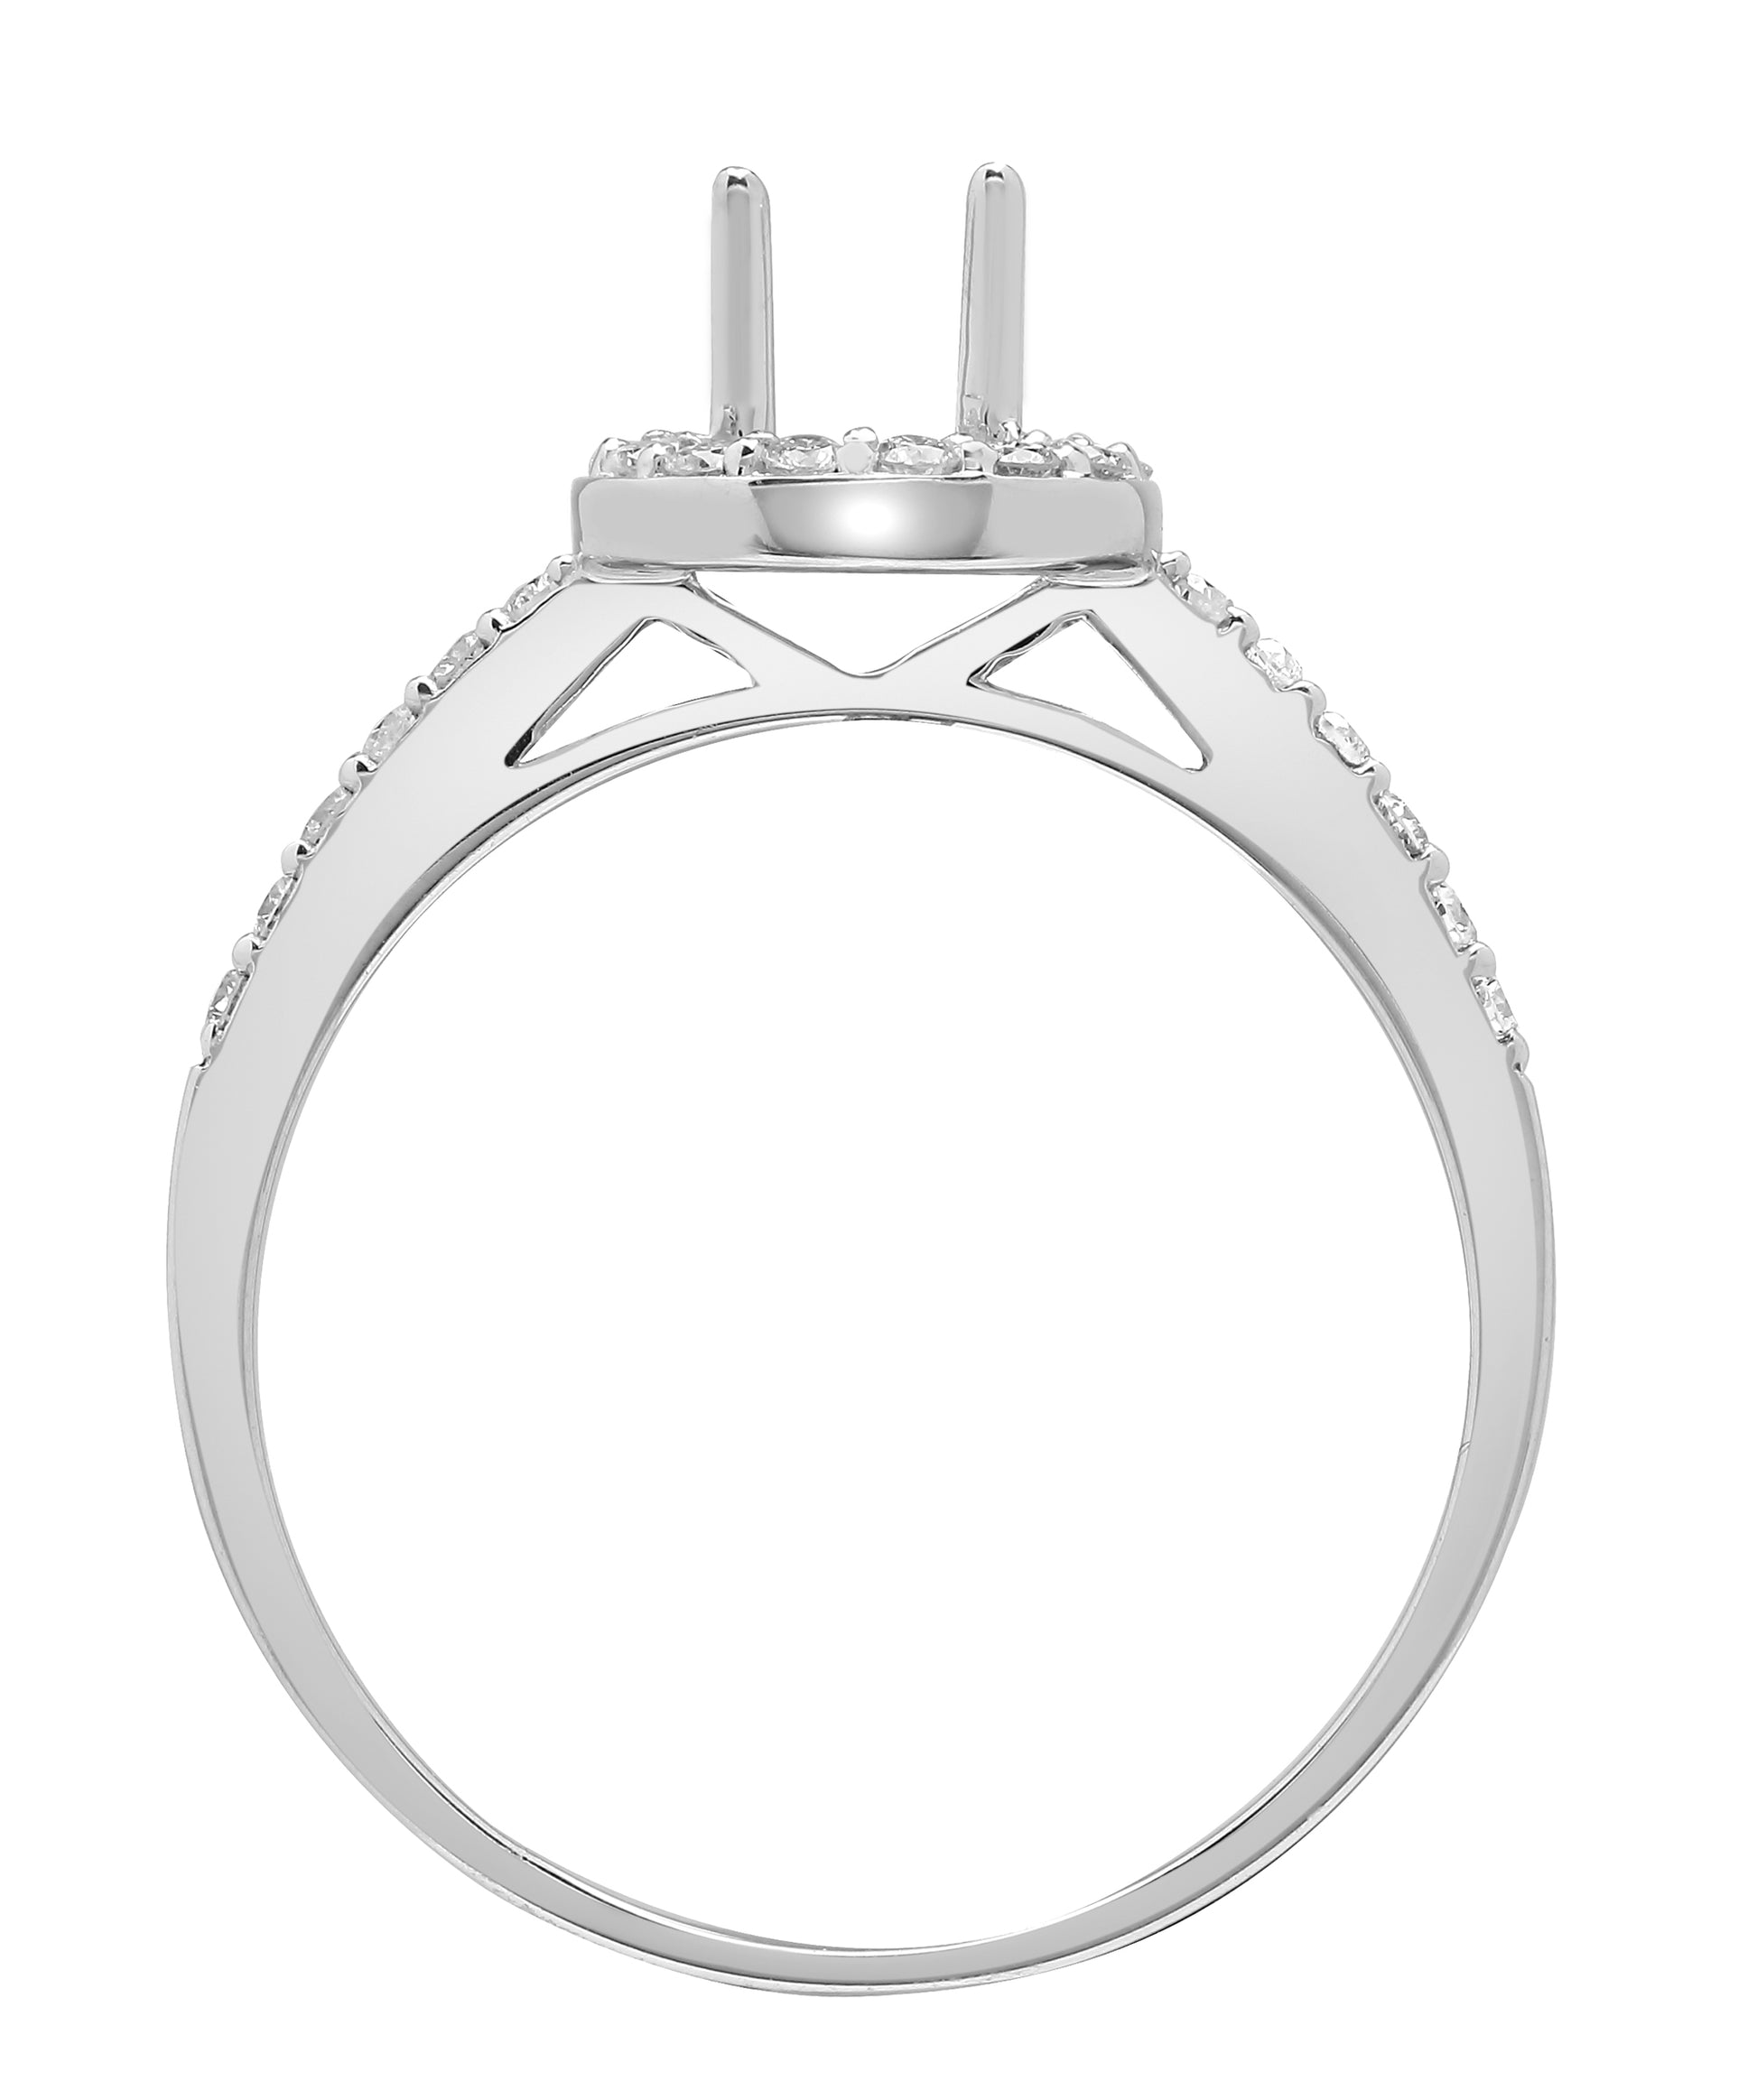 18ct White Gold  Diamond Semi Set Mount Engagement Ring 6.5mm - 18R825-025